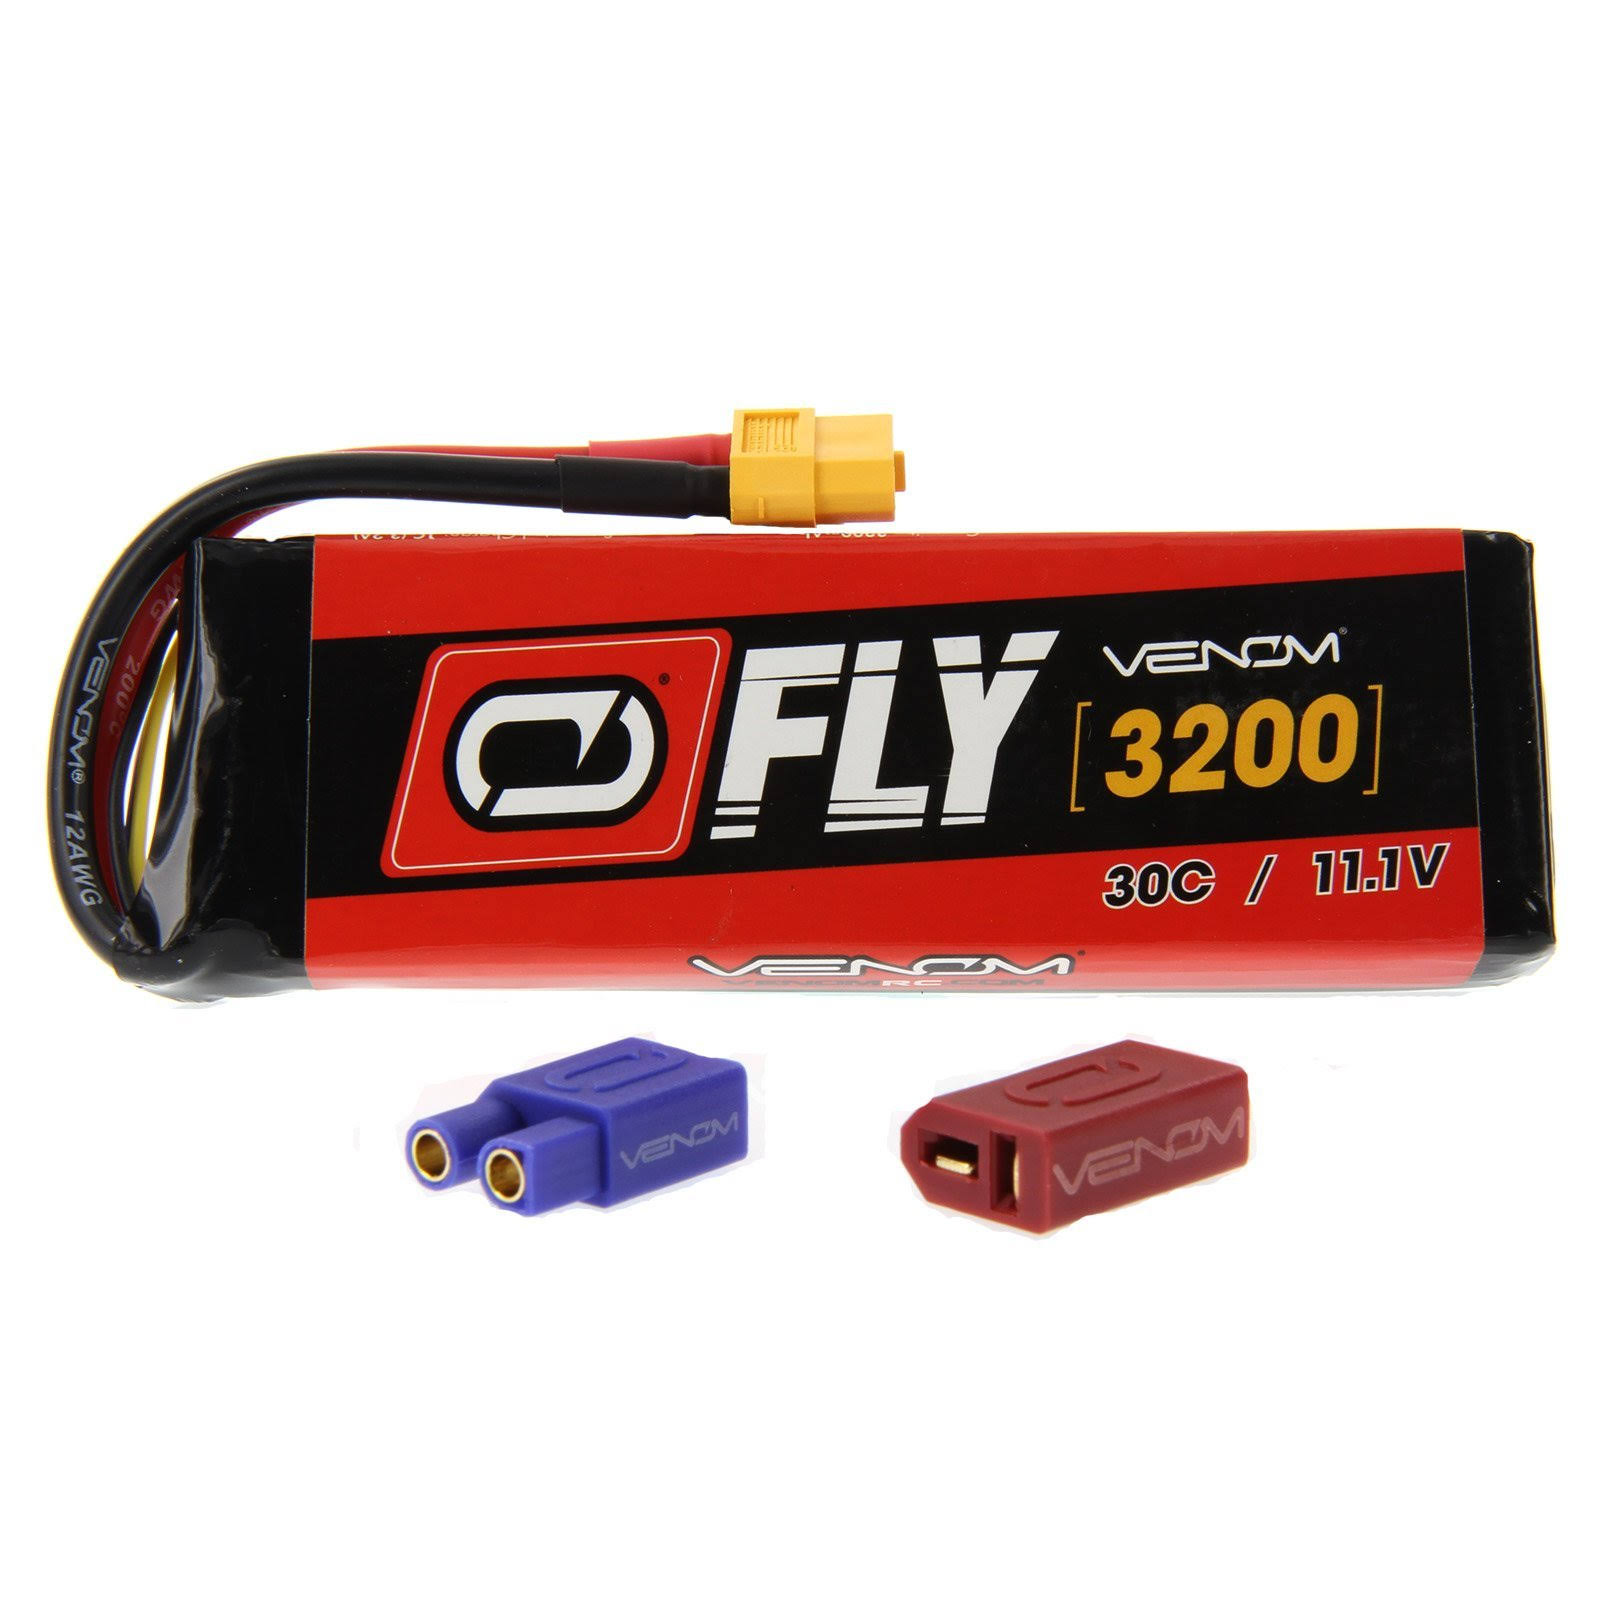 Venom Fly Lipo Battery - with Universal 2.0 Plug, 30C, 3S, 3200mah, 11.1v